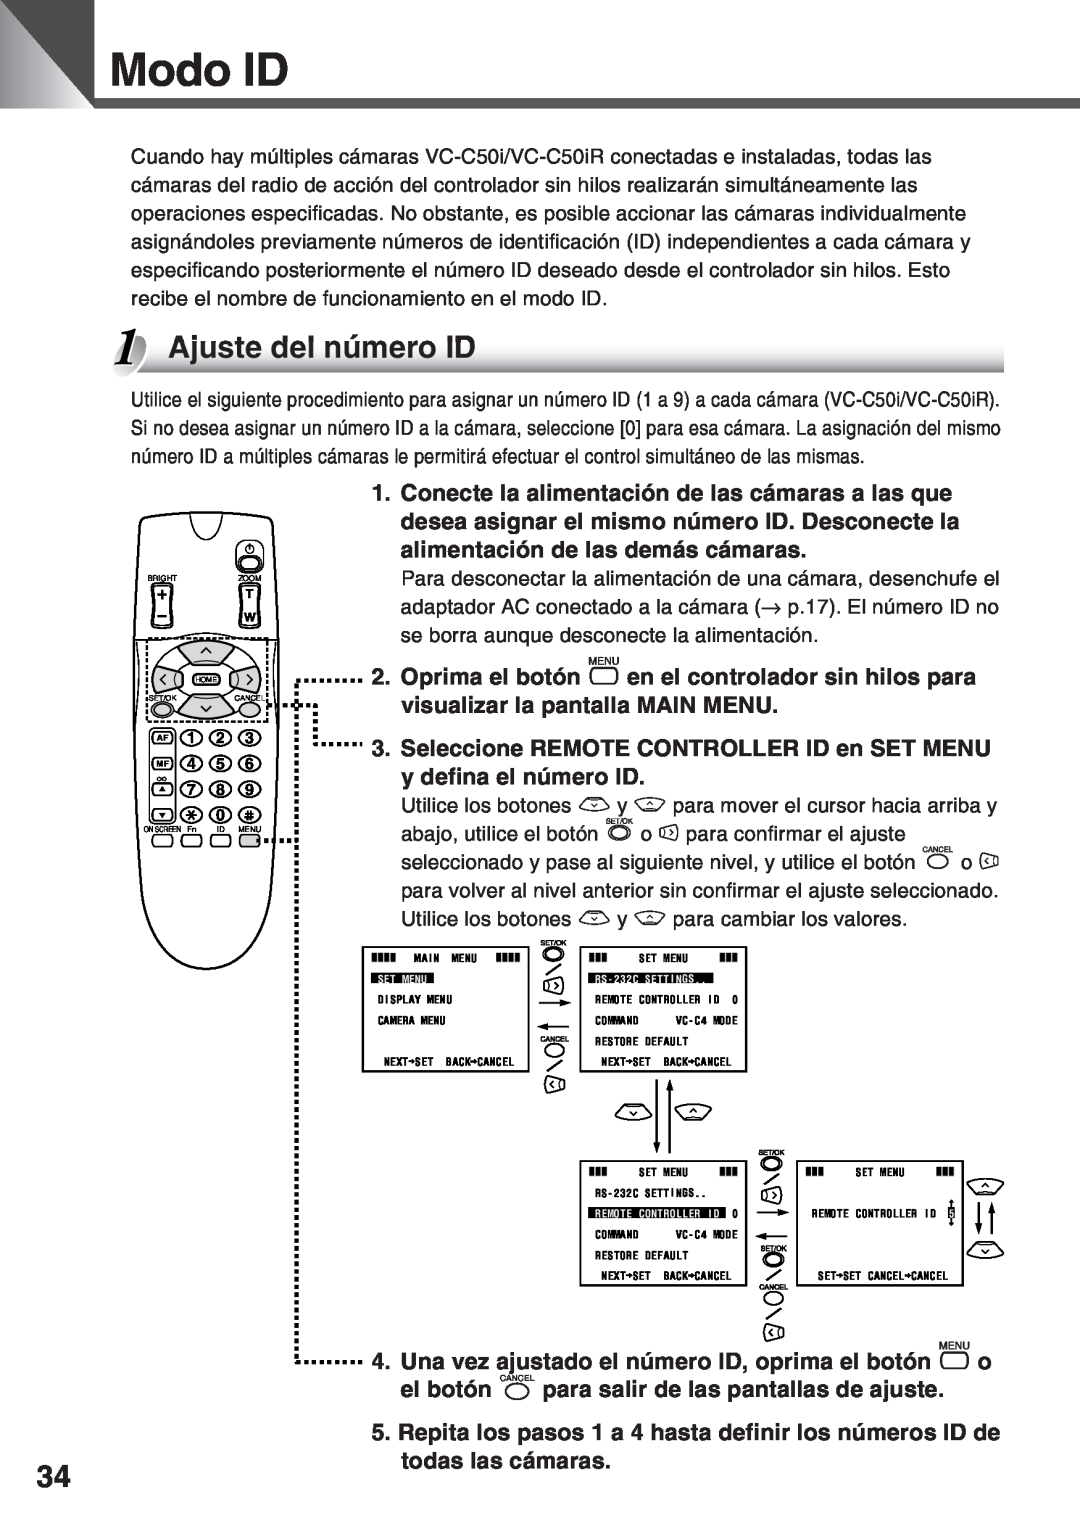 Canon VC-C50i, VC-C50IR instruction manual Modo ID, Ajuste del número ID 